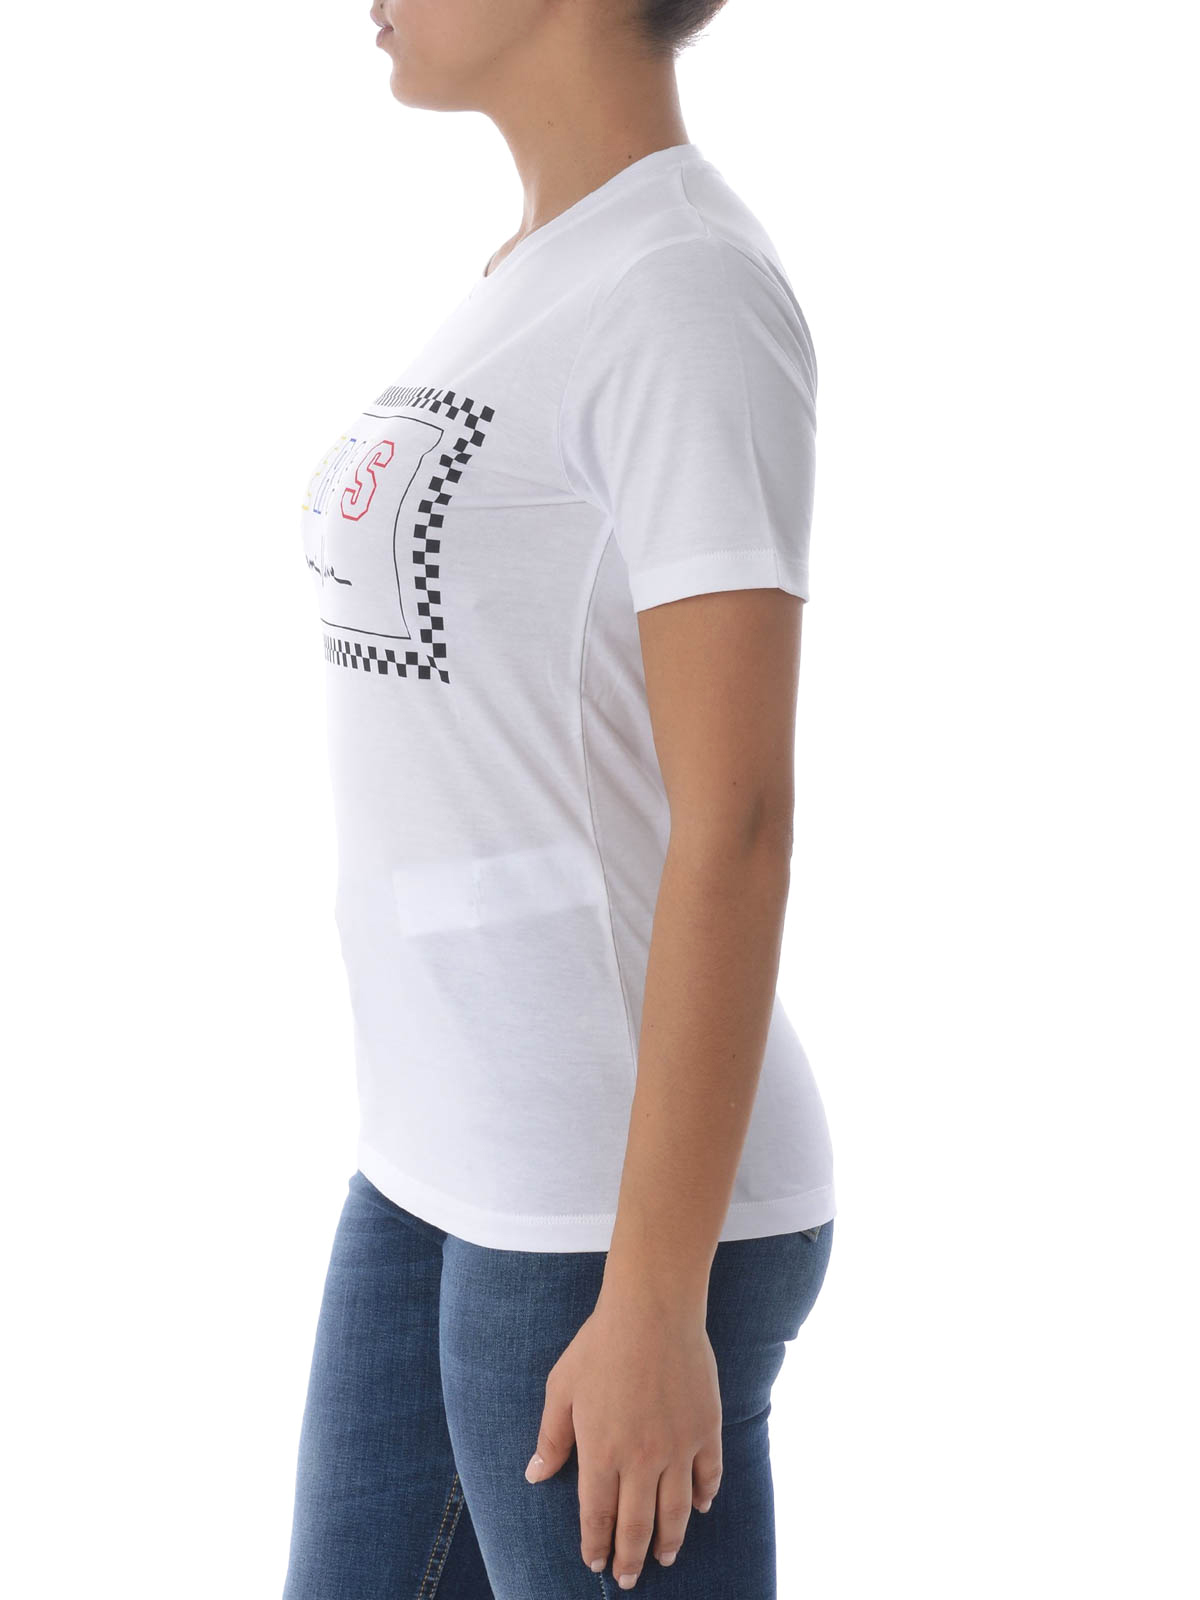 Hævde kredsløb Wardian sag T-shirts Versus Versace - Multicolour logo print white slim Tee -  BD90683BJ10388B1001